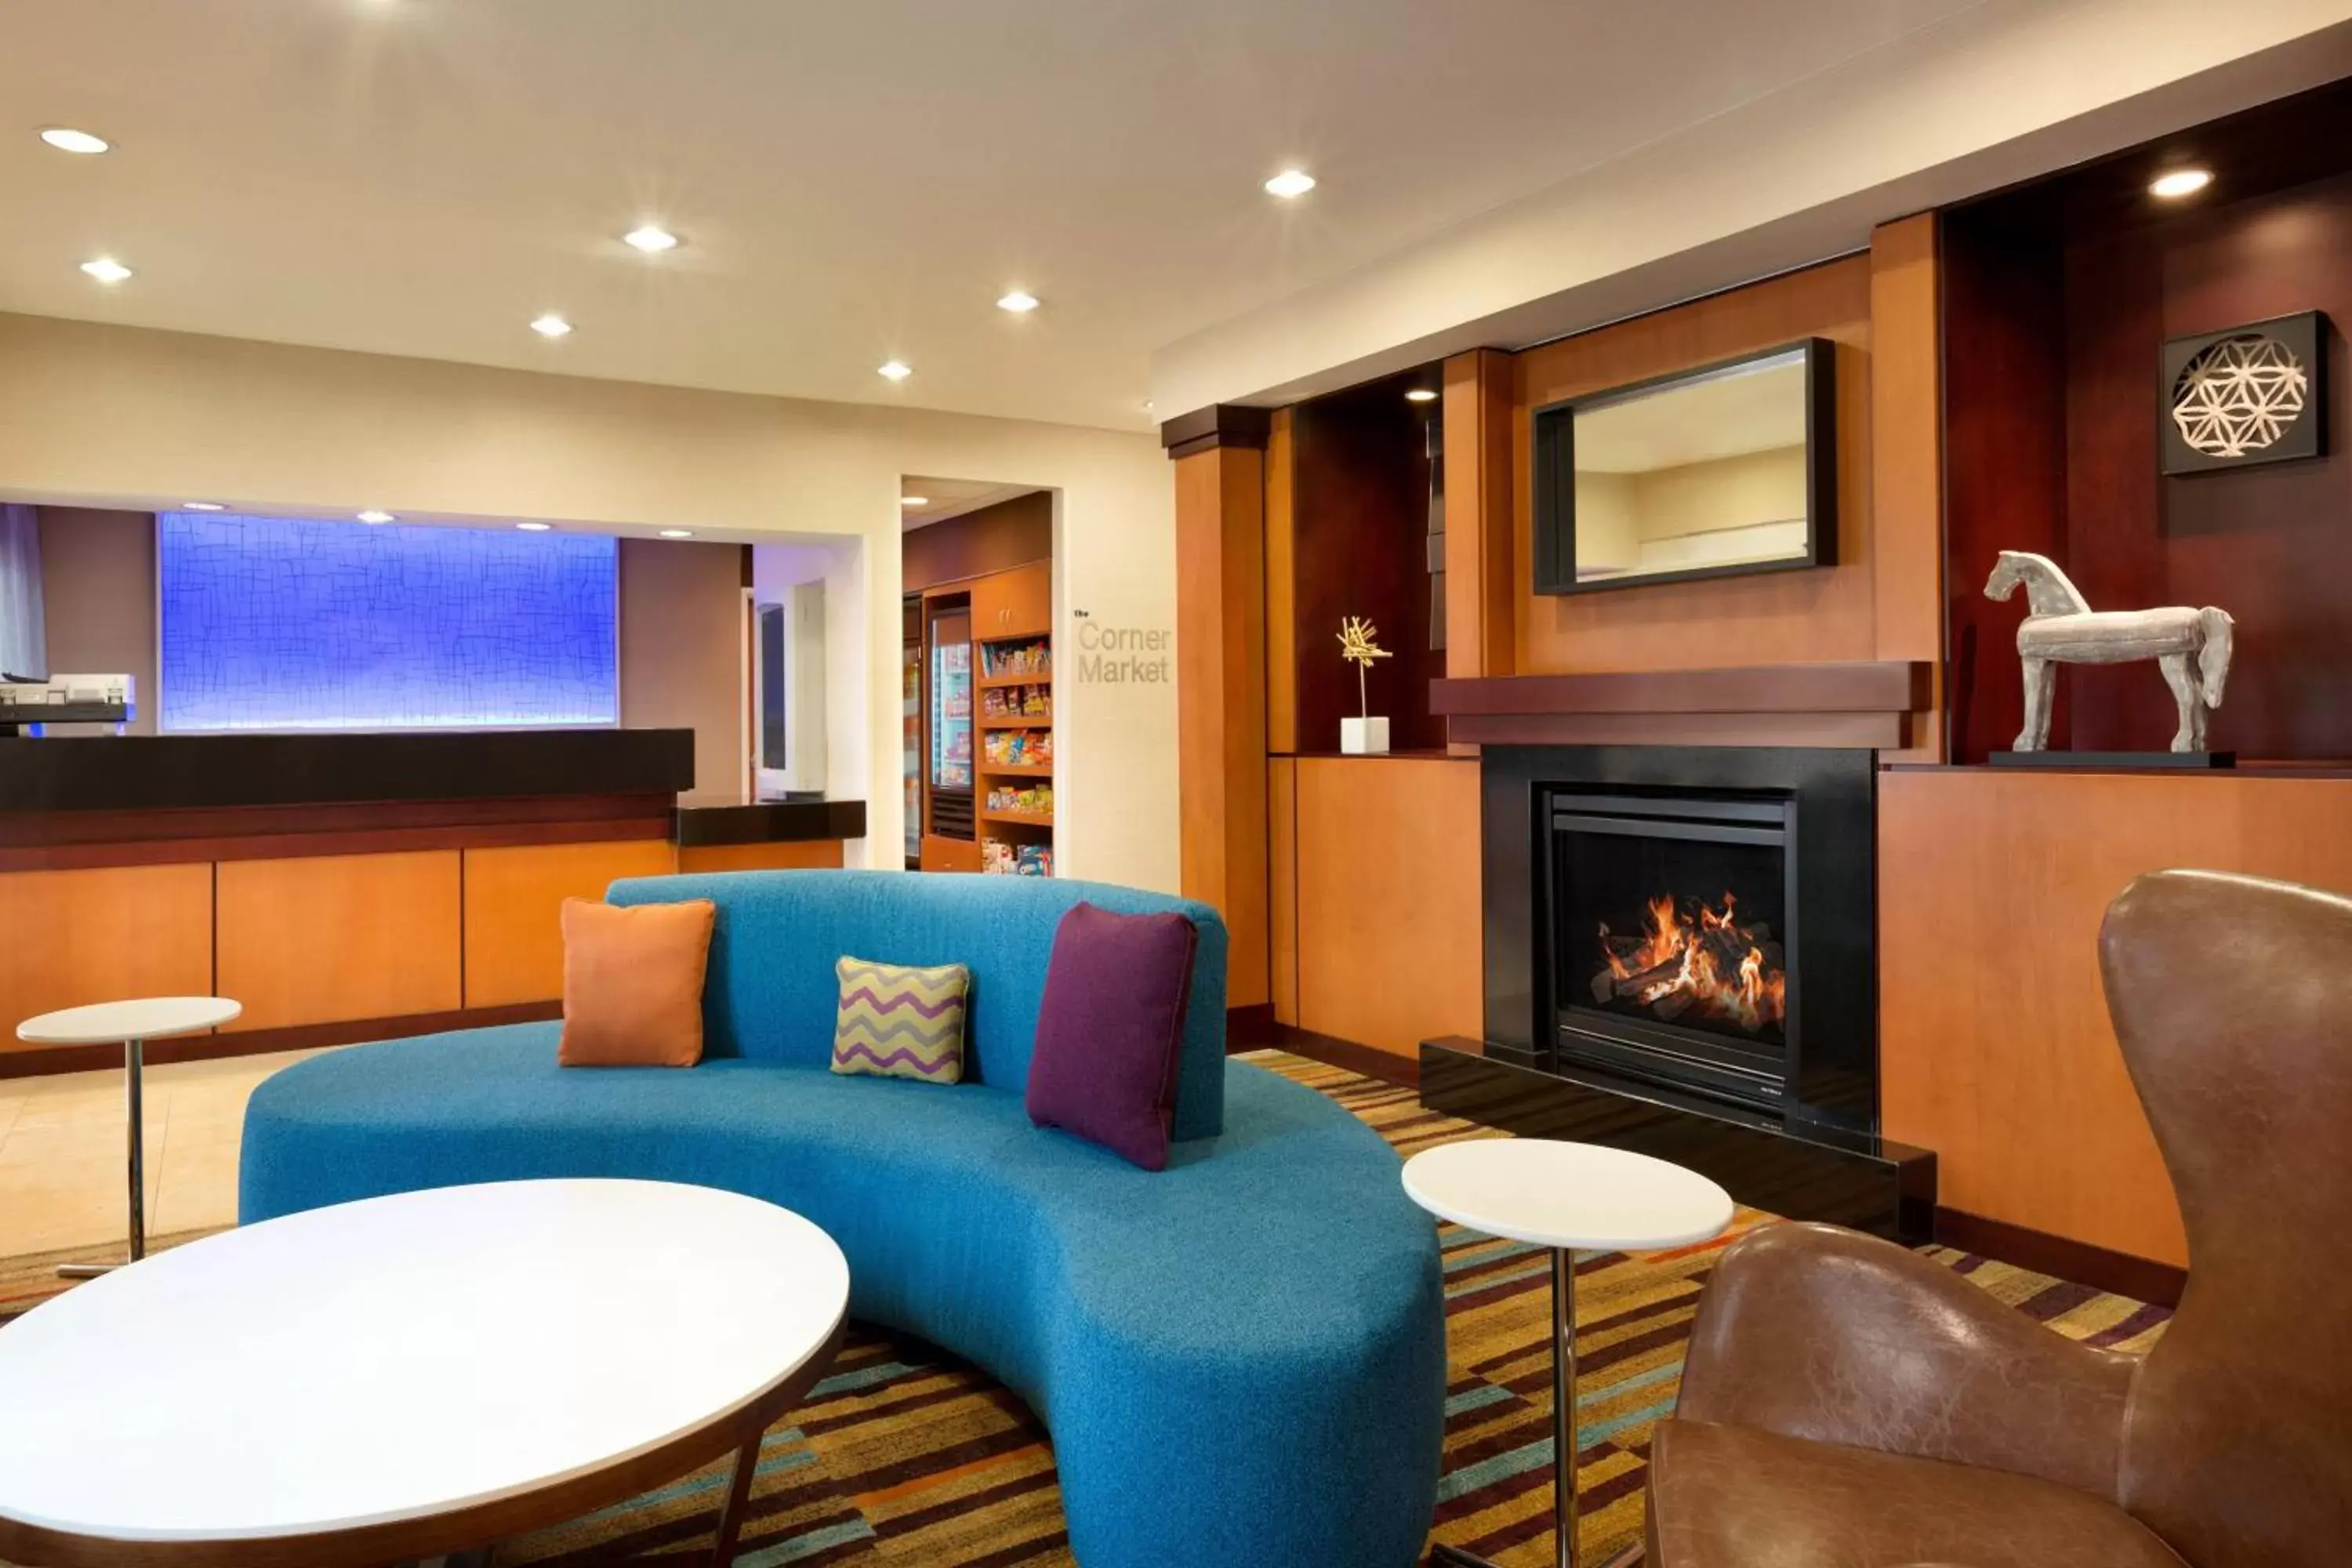 Lobby or reception in Fairfield Inn & Suites Dallas Mesquite